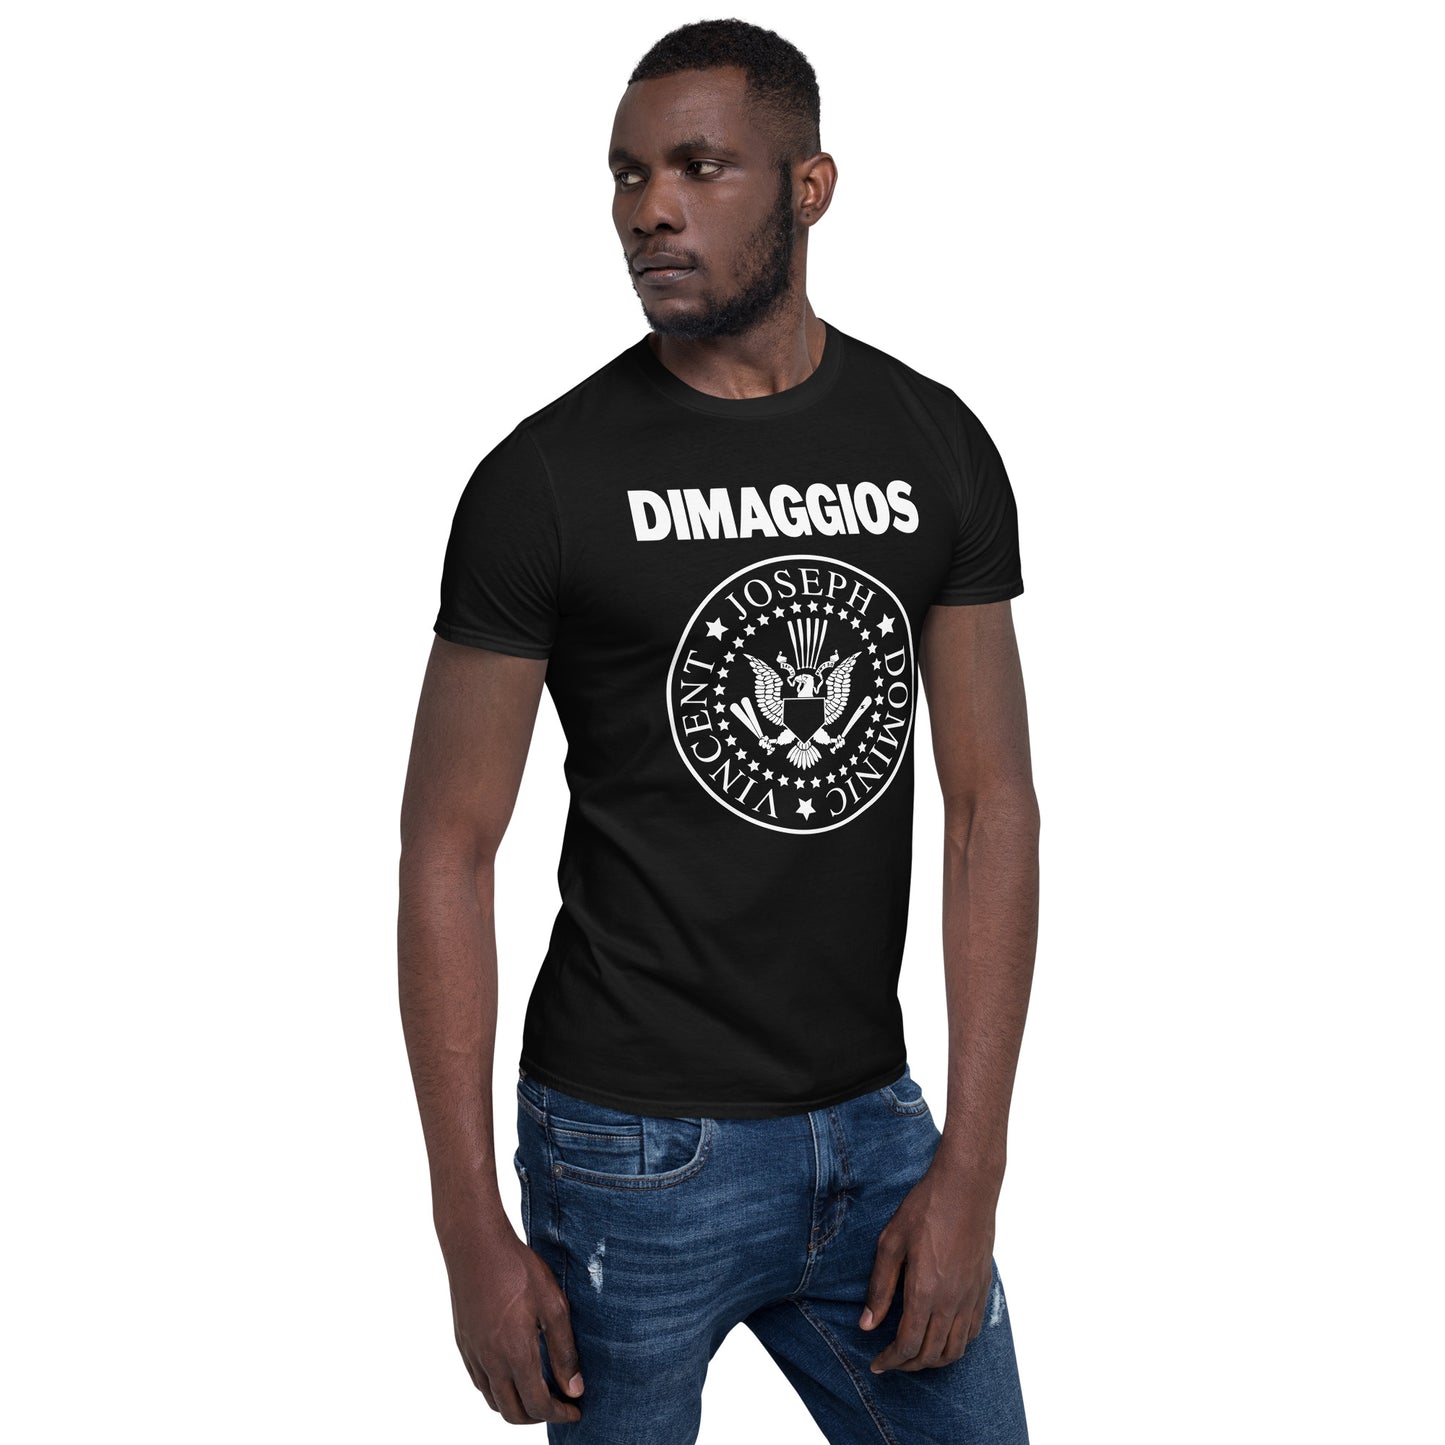 "DiMAggio" Ramones T-Shirt